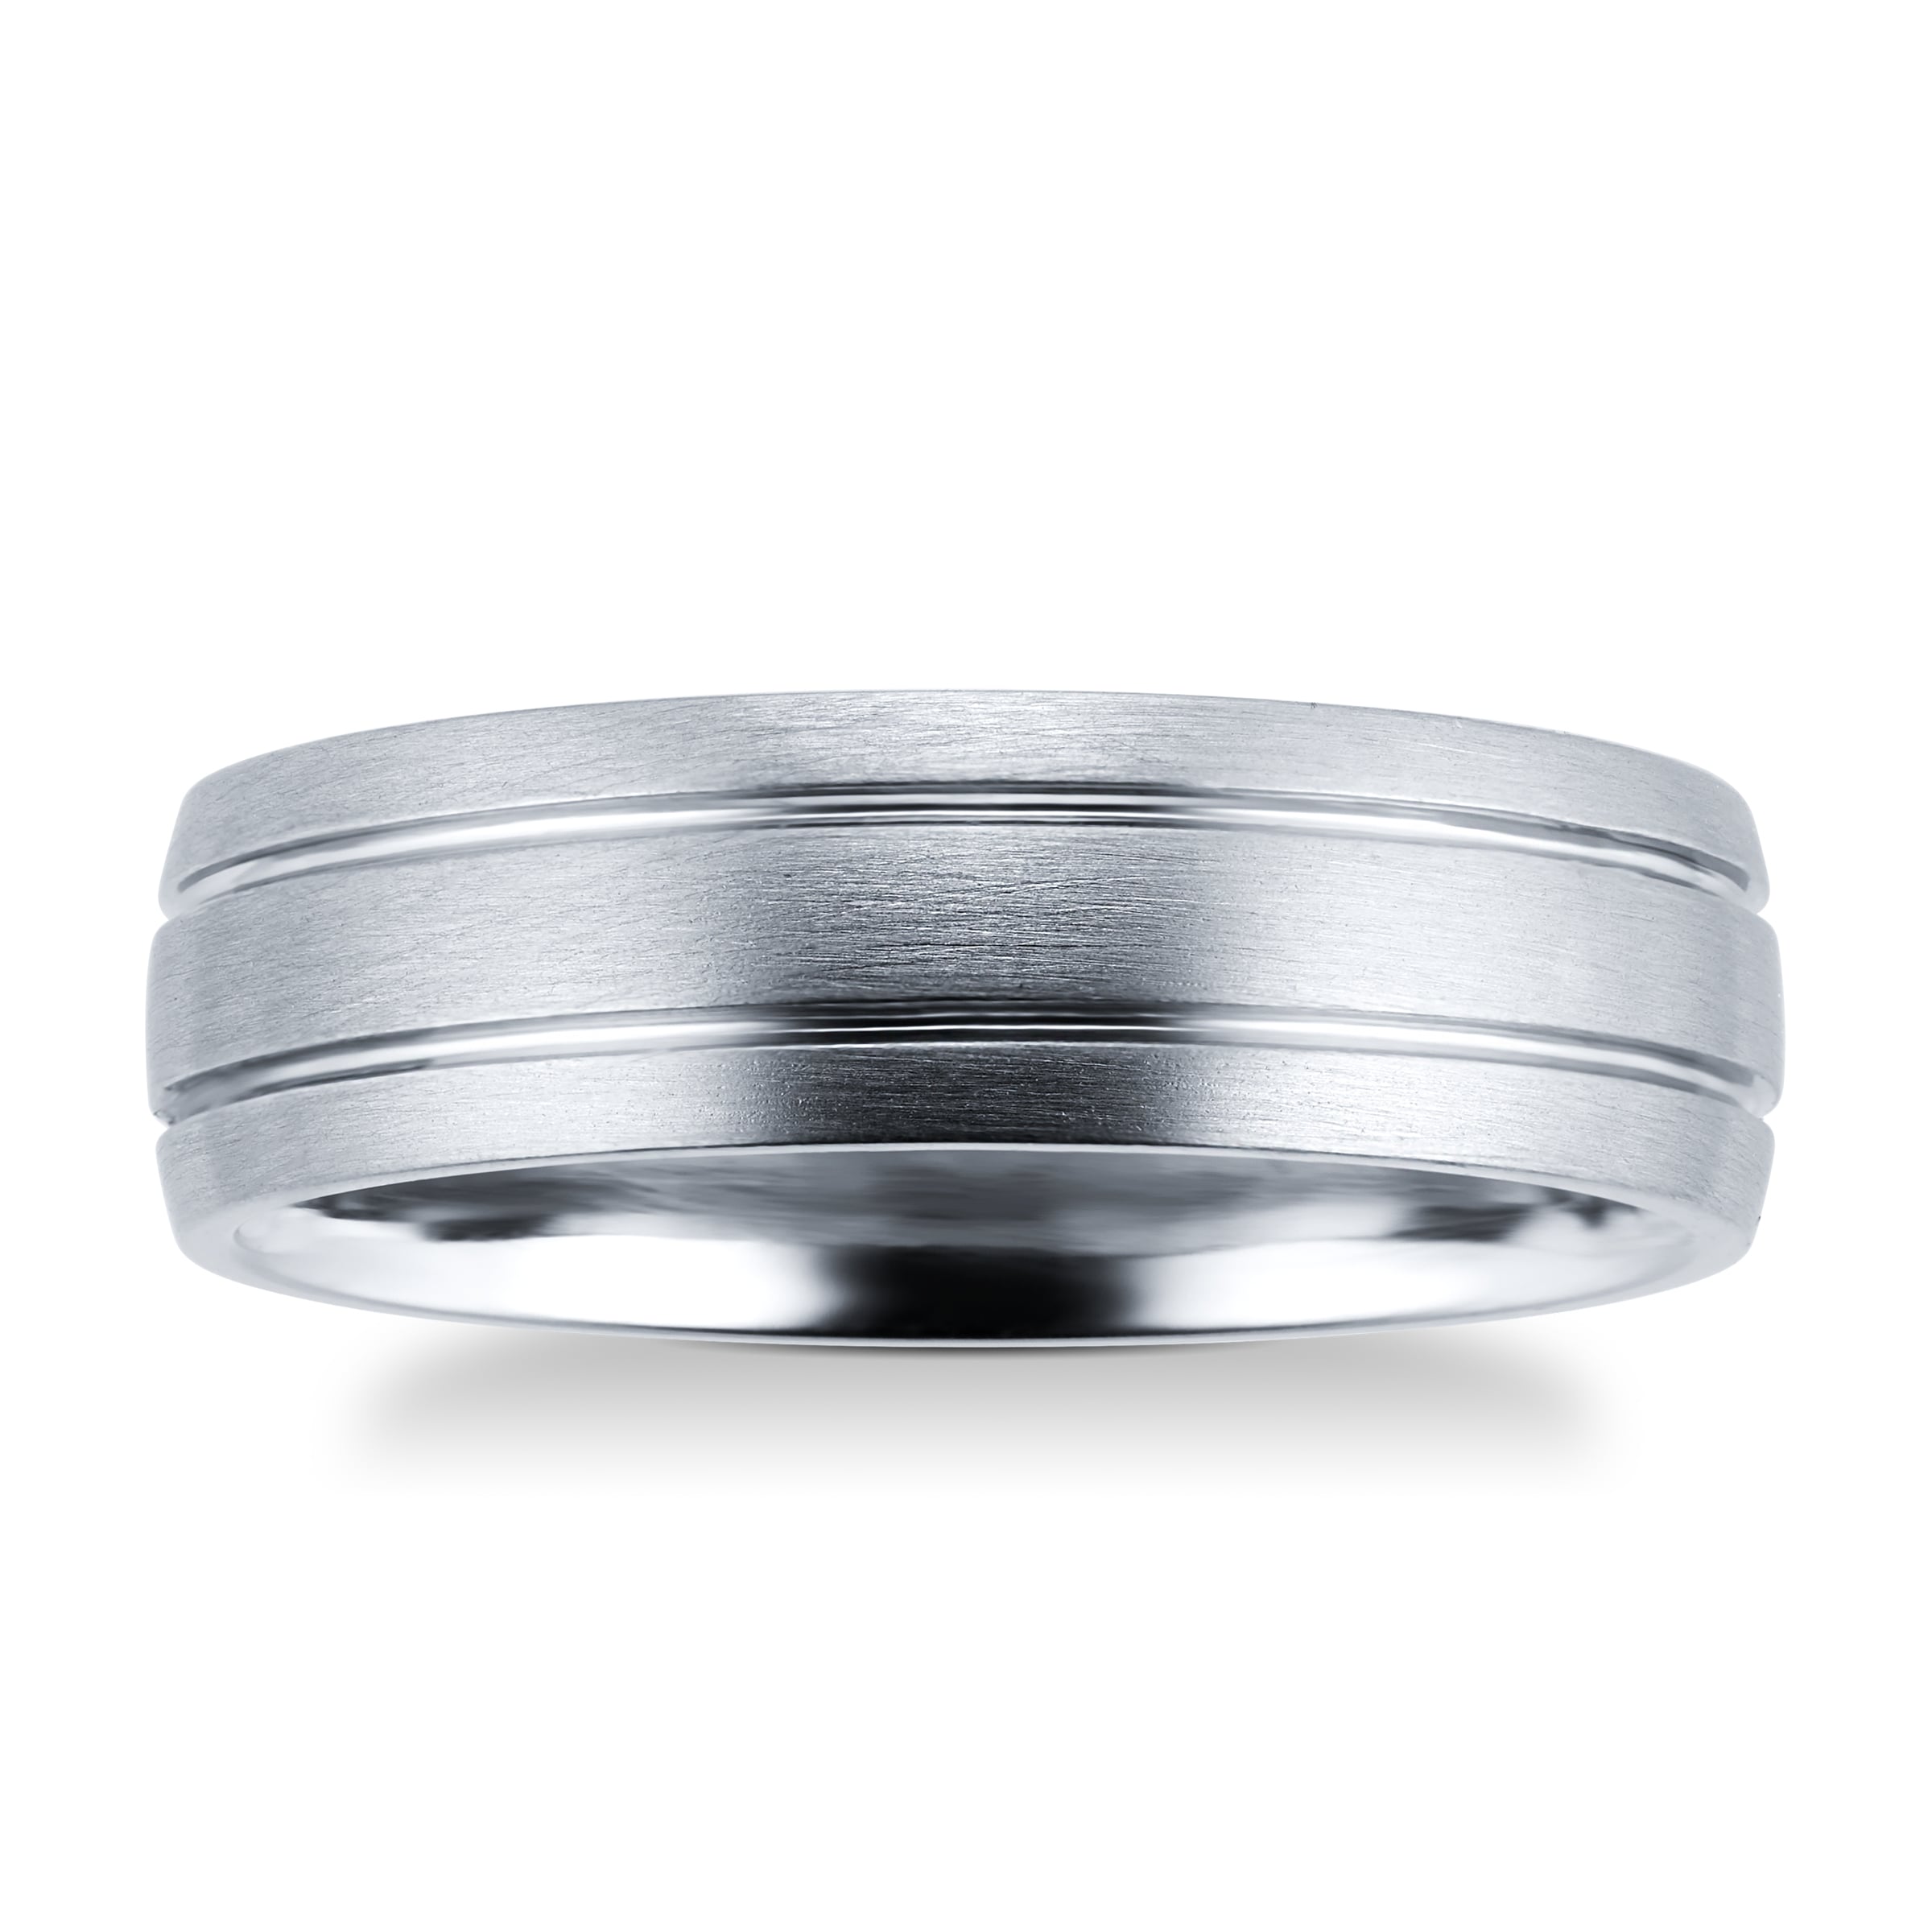 Palladium 500 6mm Fancy Gents Ring - Ring Size L